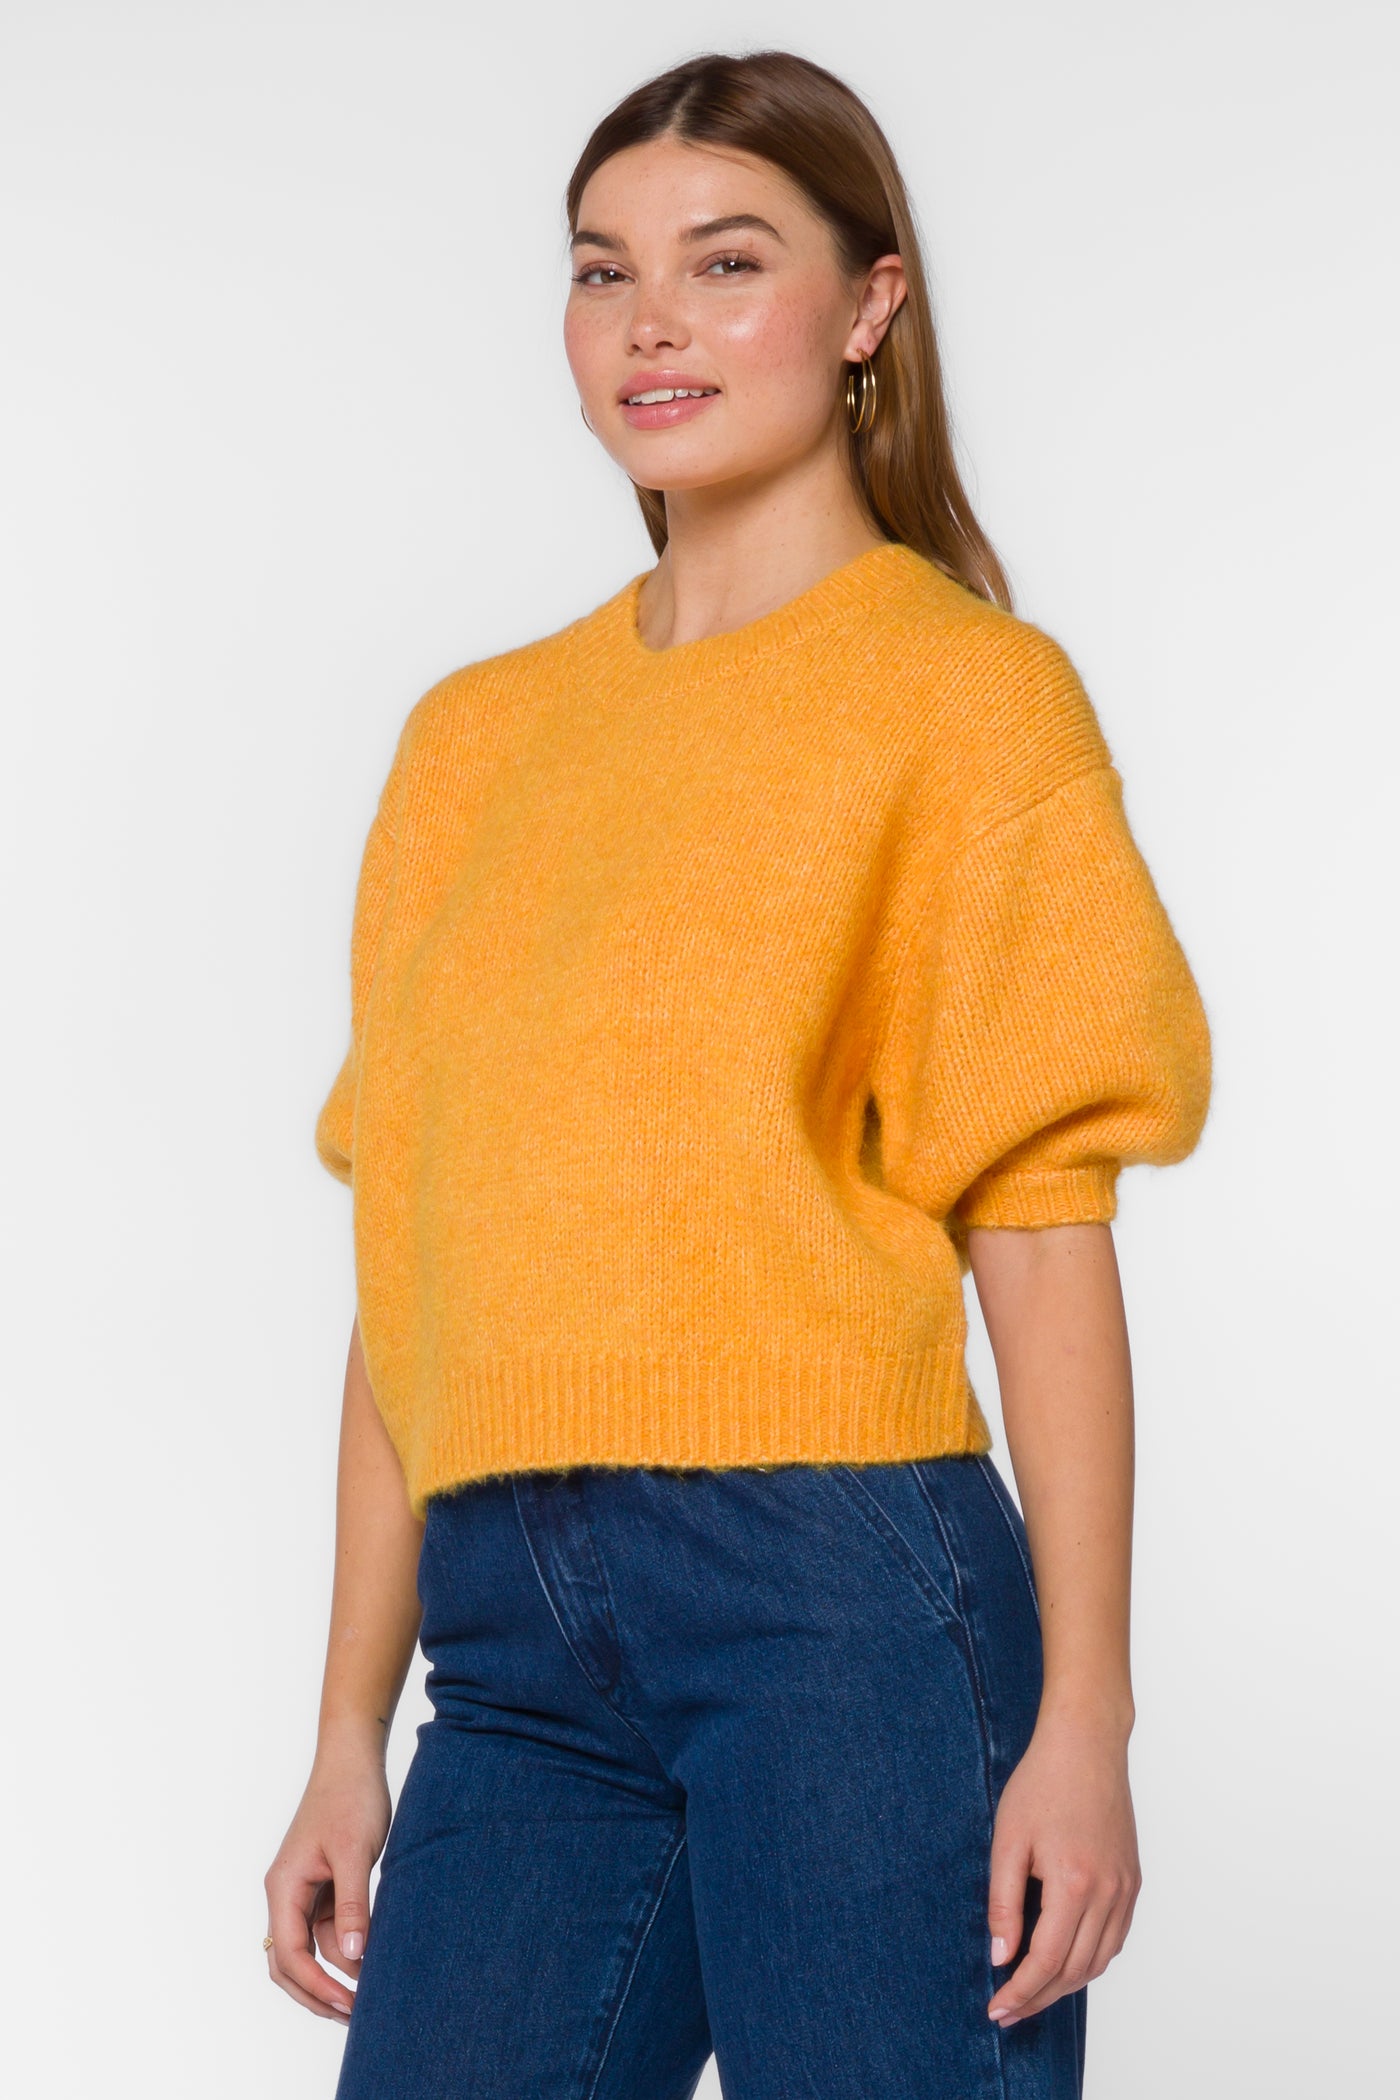 Fendy Marled Orange Sweater - Sweaters - Velvet Heart Clothing